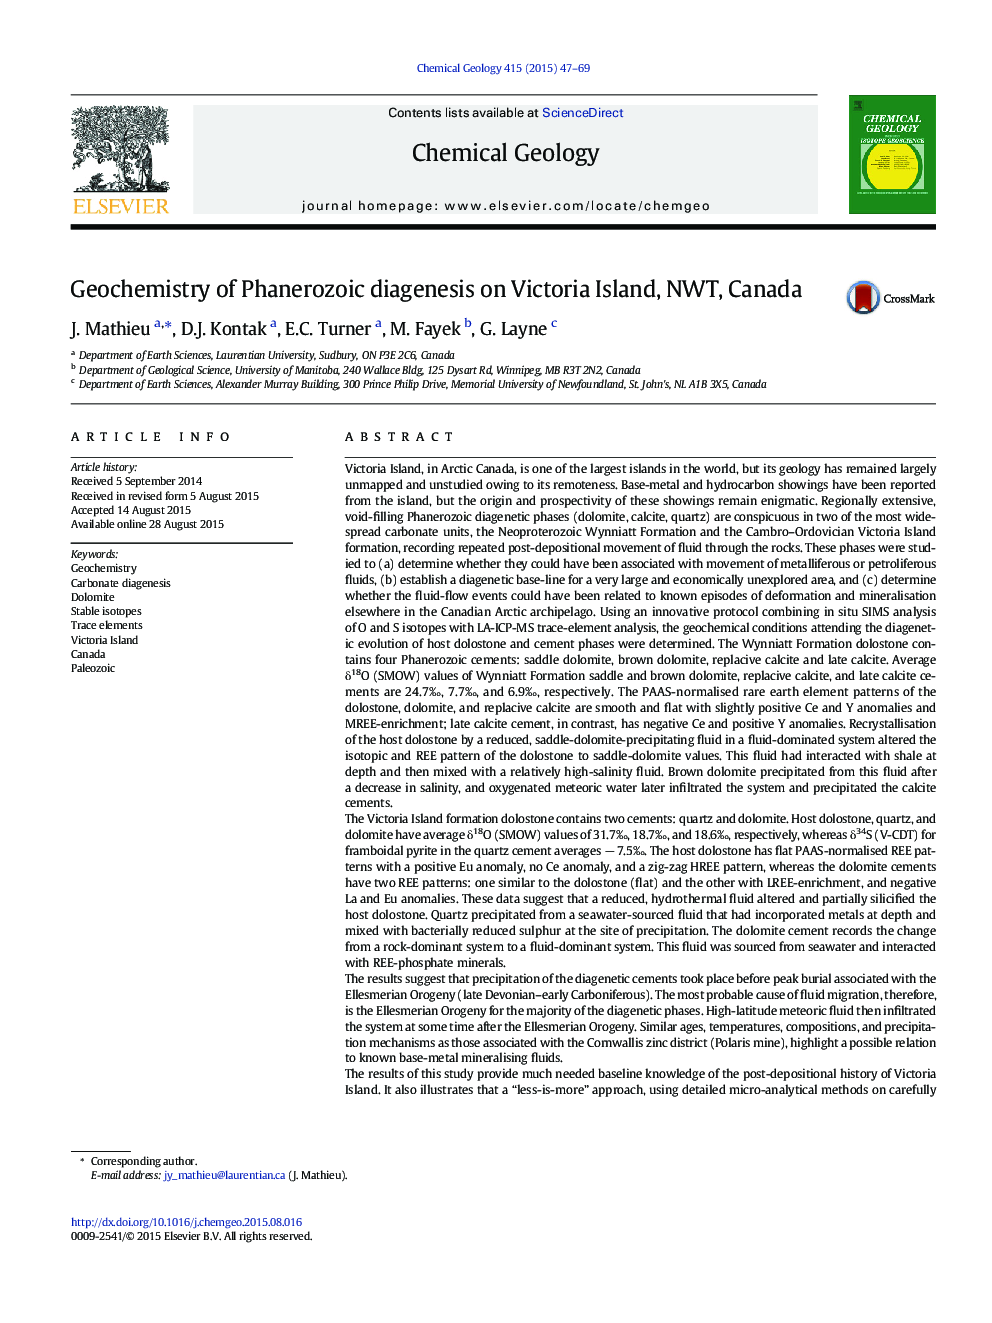 Geochemistry of Phanerozoic diagenesis on Victoria Island, NWT, Canada